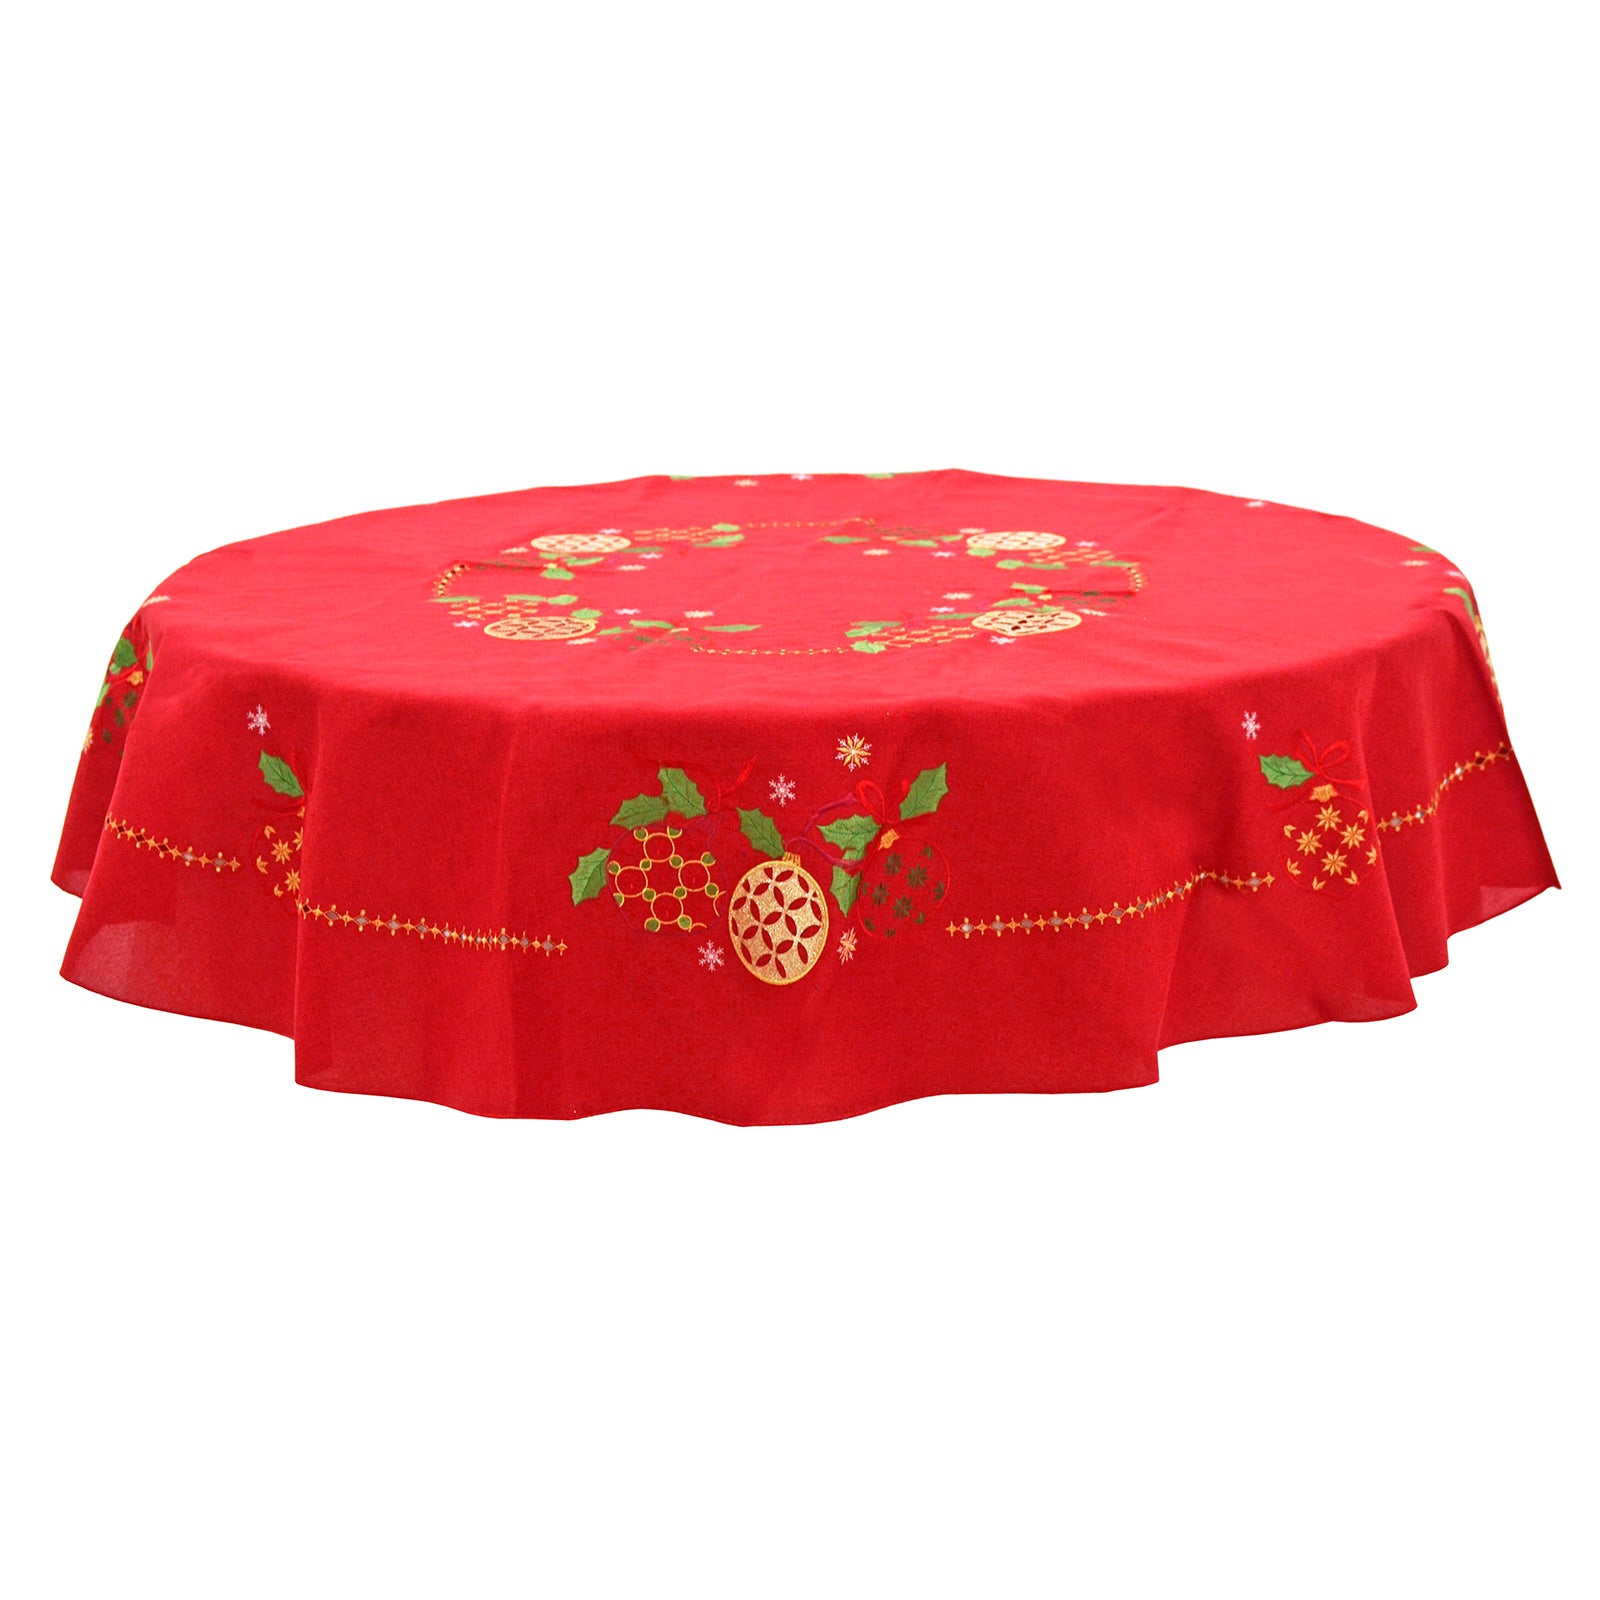 Mr Crimbo Christmas Baubles White Red Tablecloth Napkins - MrCrimbo.co.uk -XS6562 - Red -christmas napkins